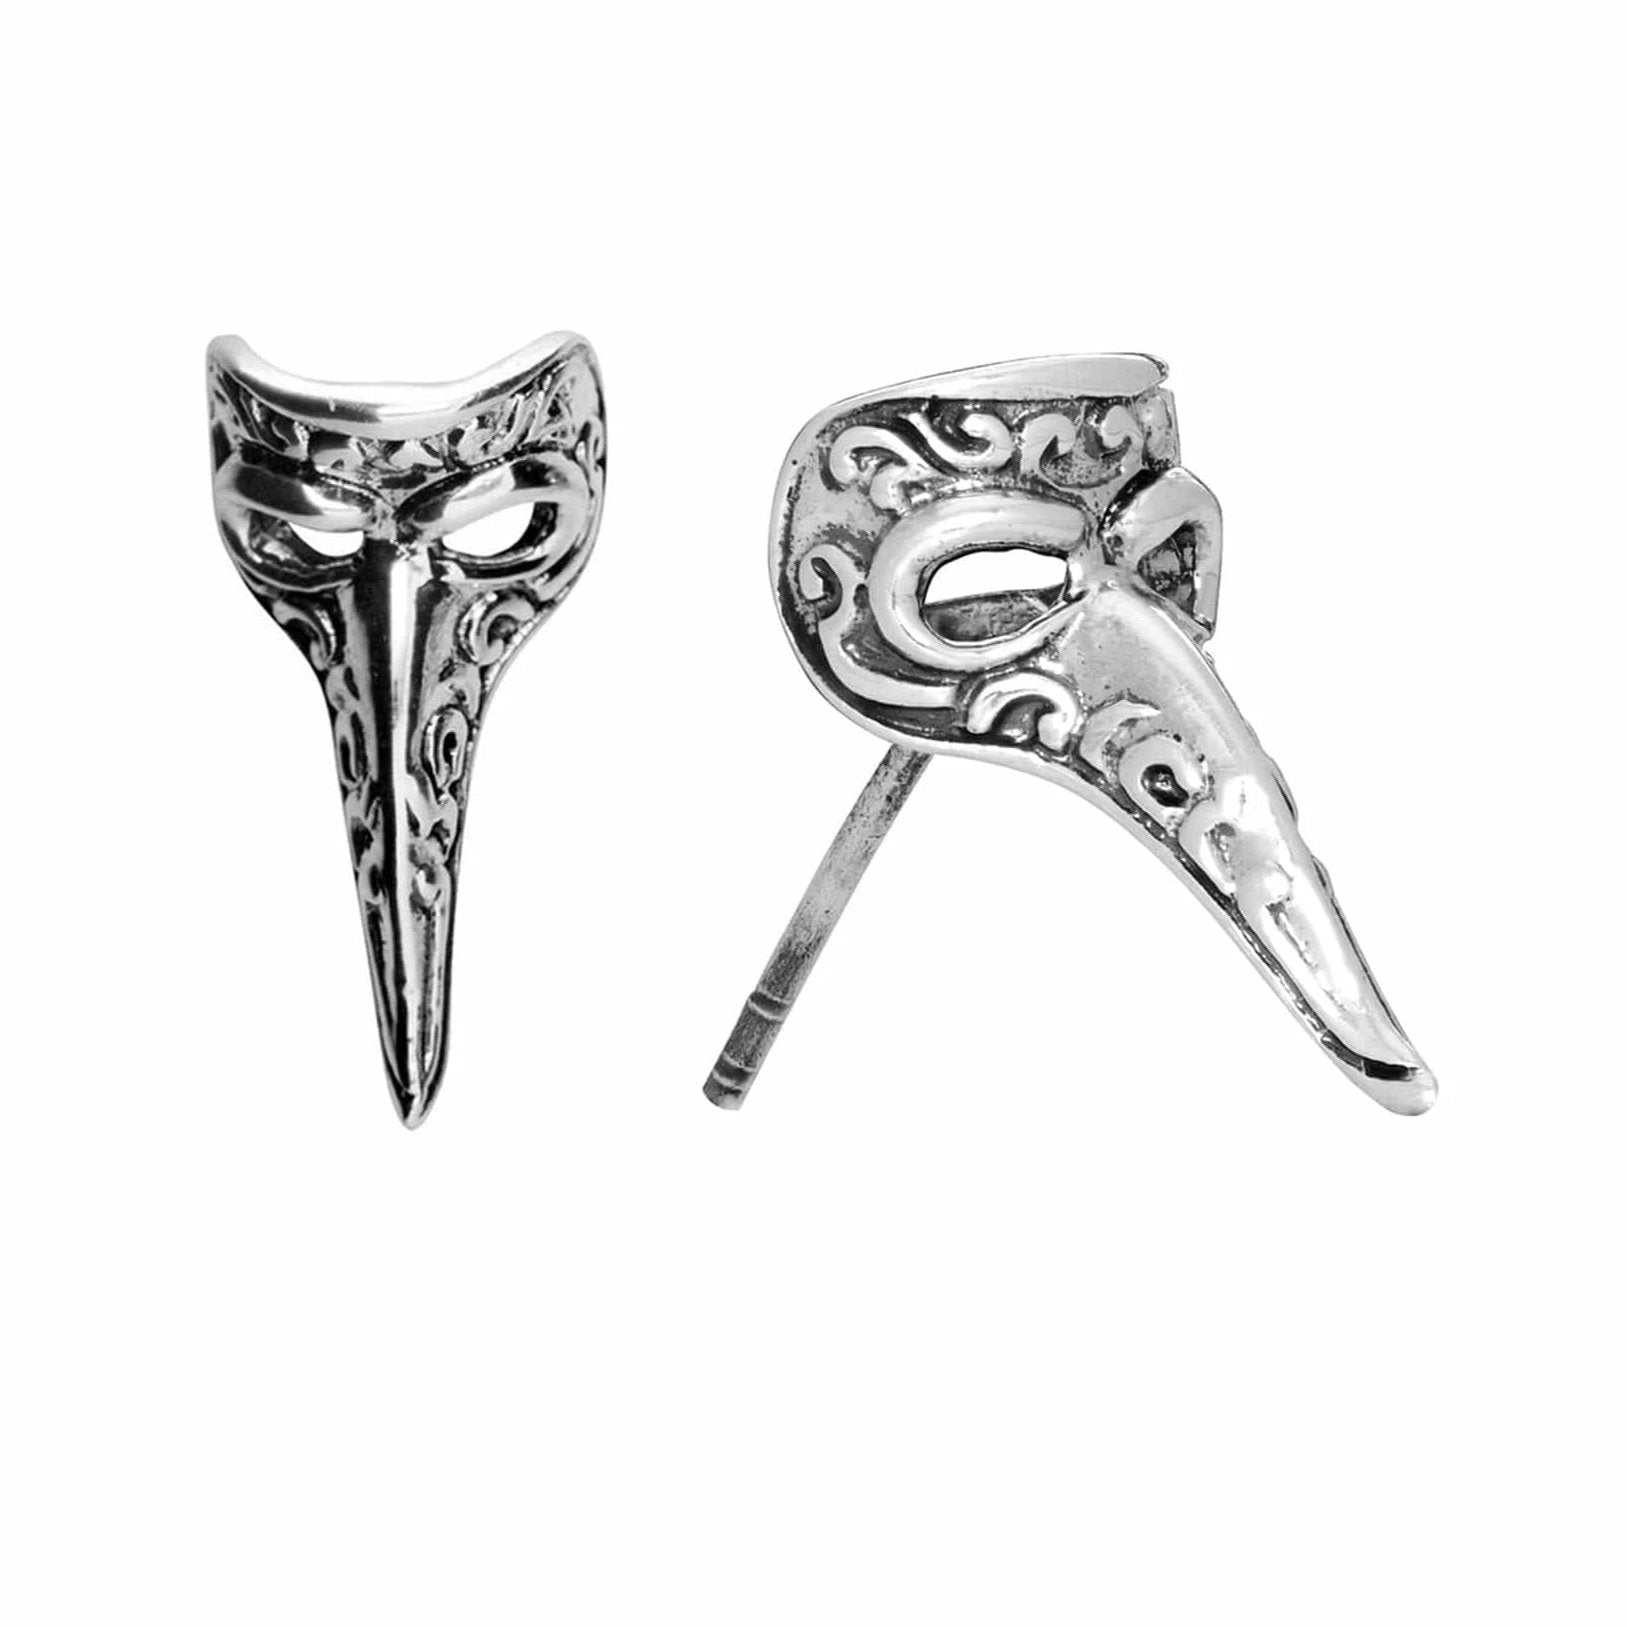 Plague Mask Earrings - Silver Phantom Jewelry